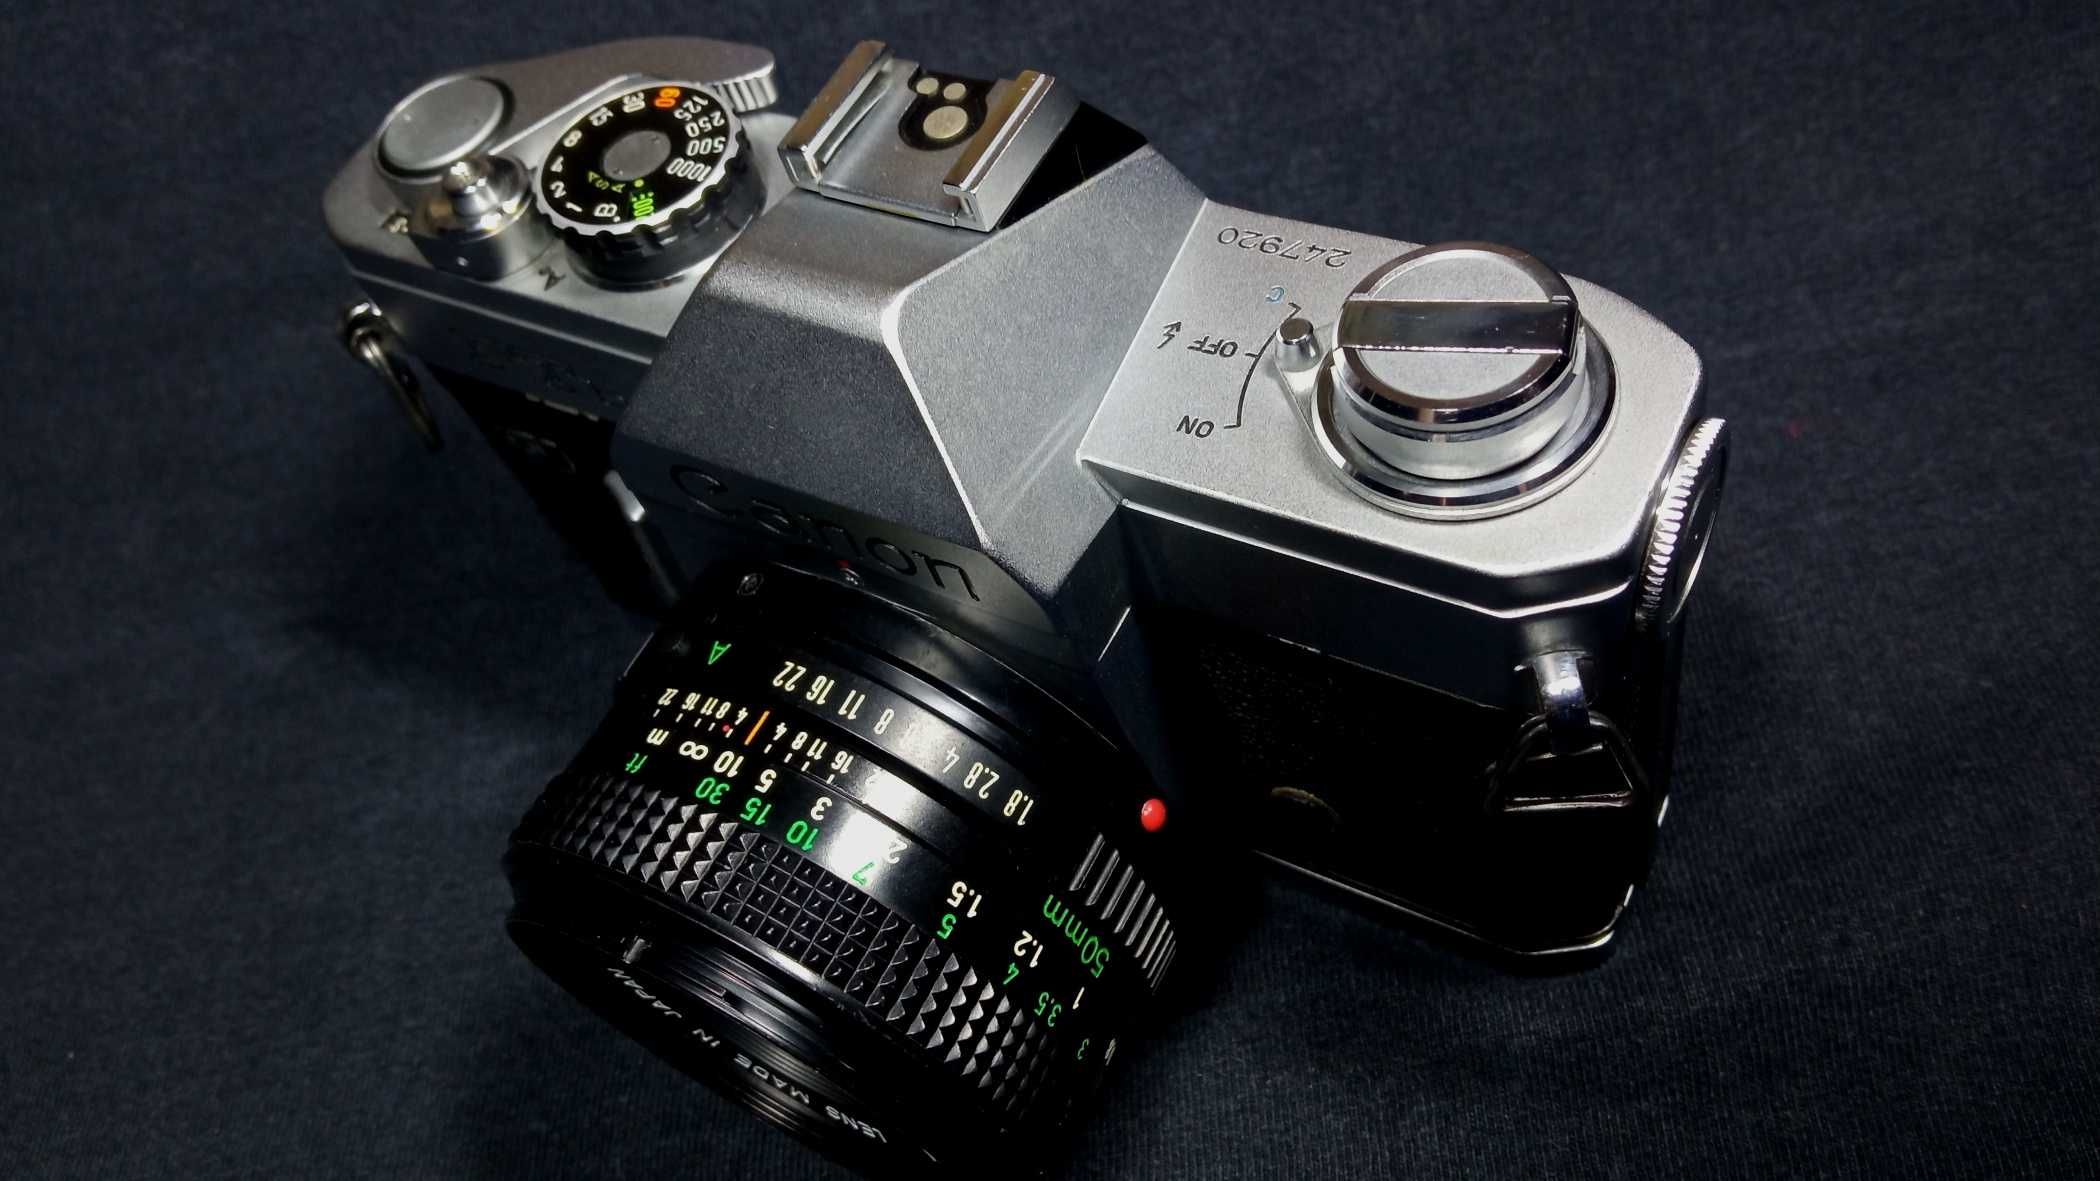 Canon FTb QL Lens FD 50mm 1.8 / 28mm 2.8 / 135mm як новий